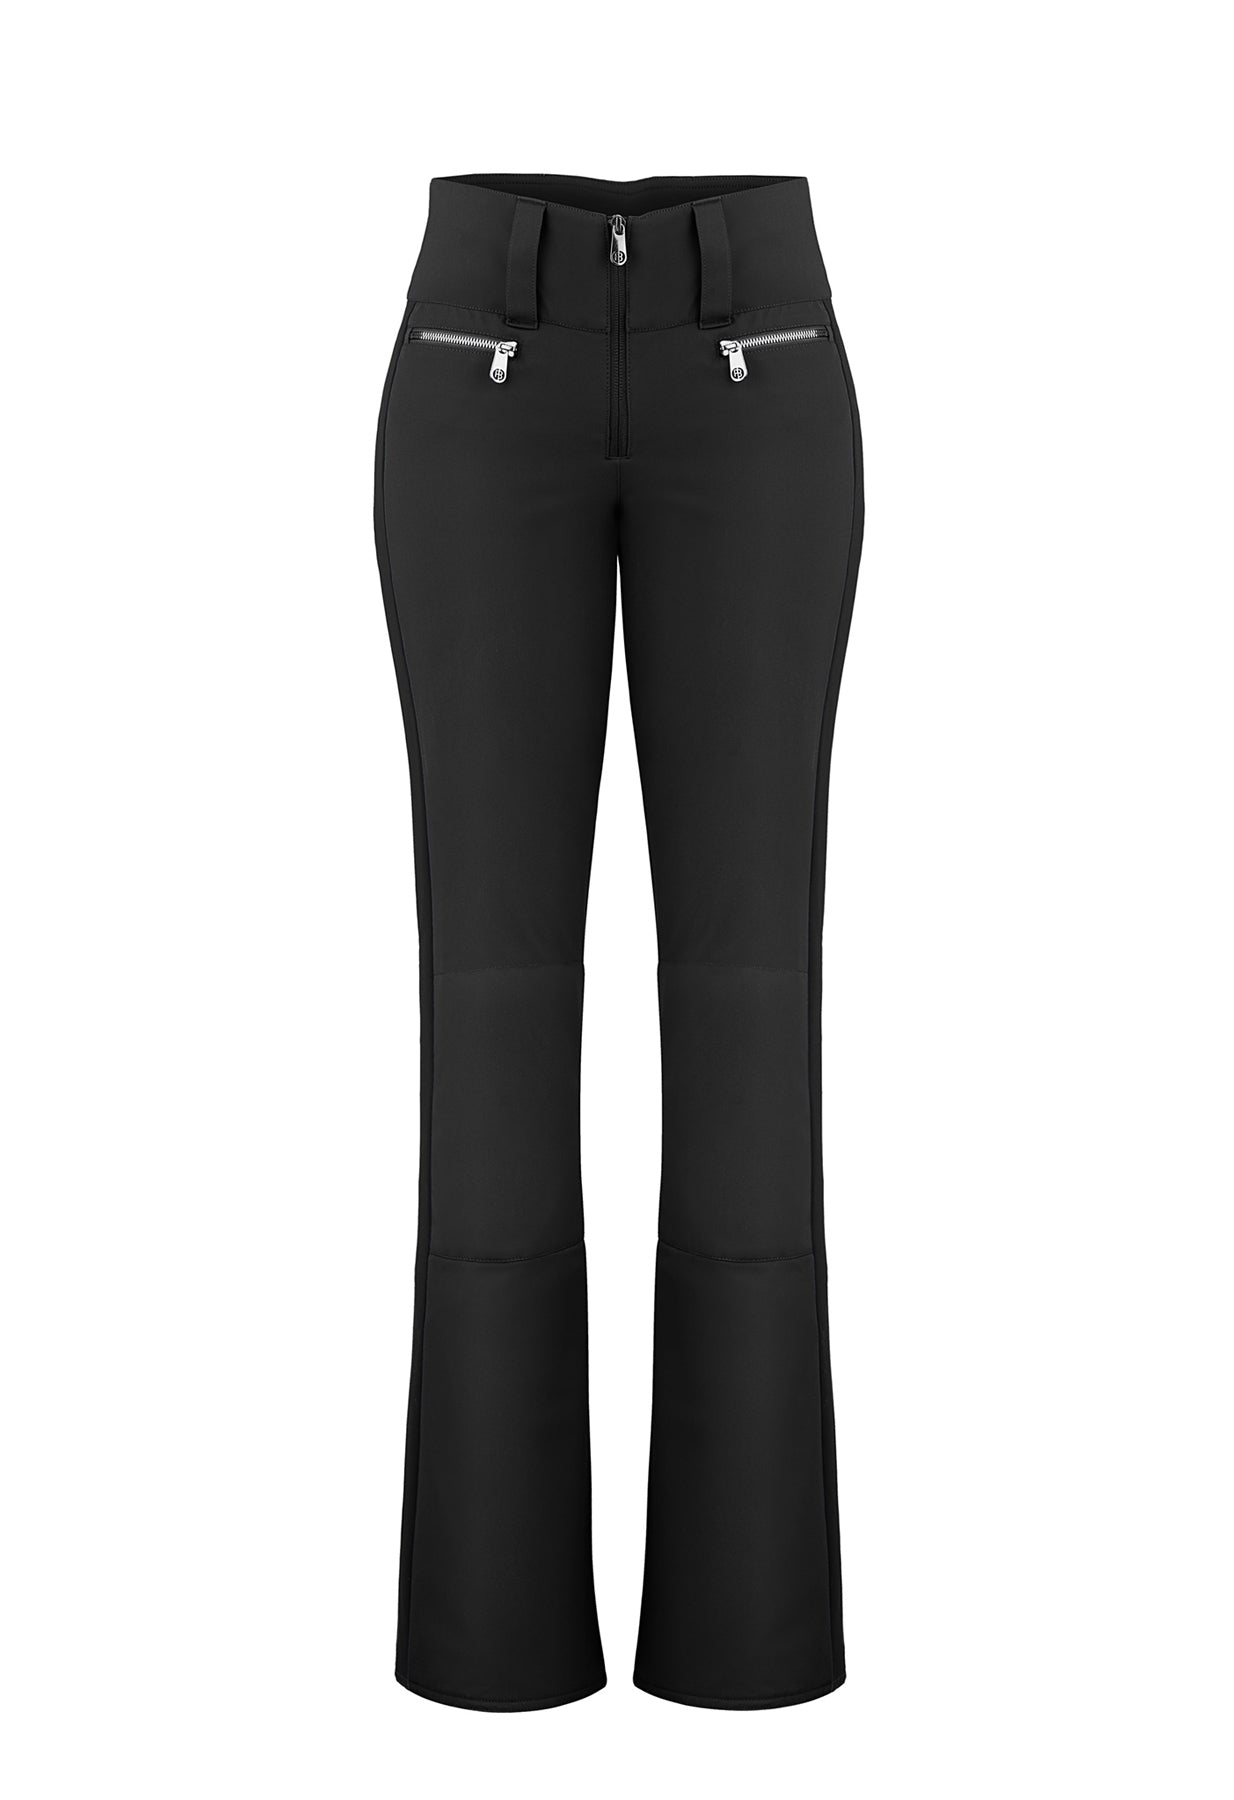 Poivre Blanc W23-0822 Shorter length Stretch Ski Pant in Black